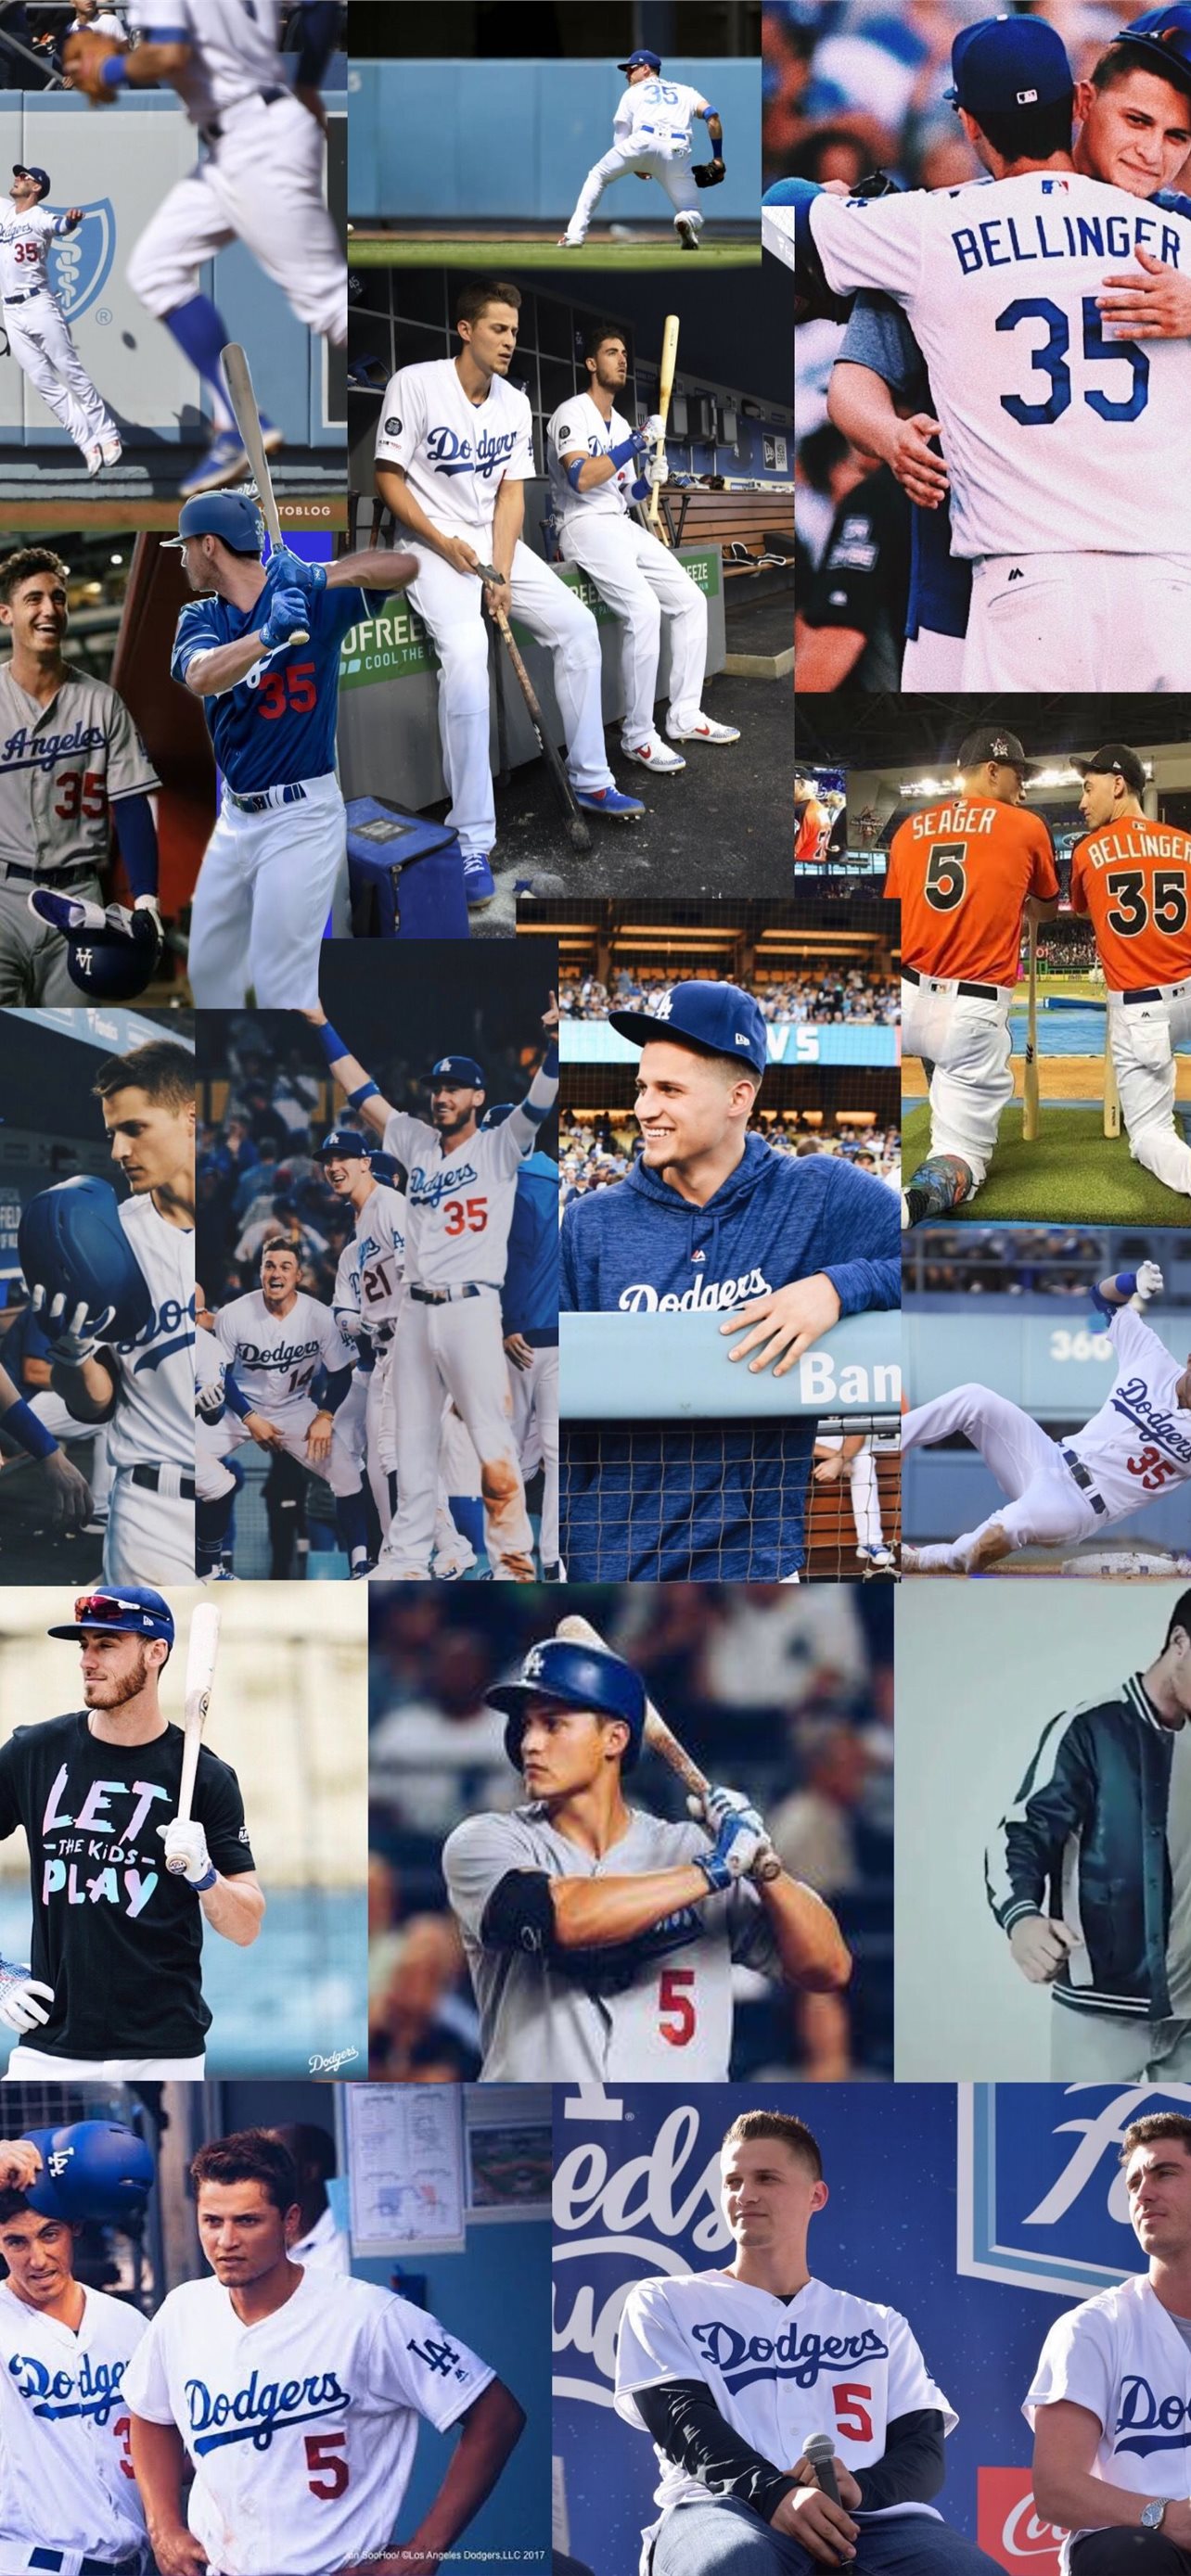 Dodgers Iphone Wallpapers